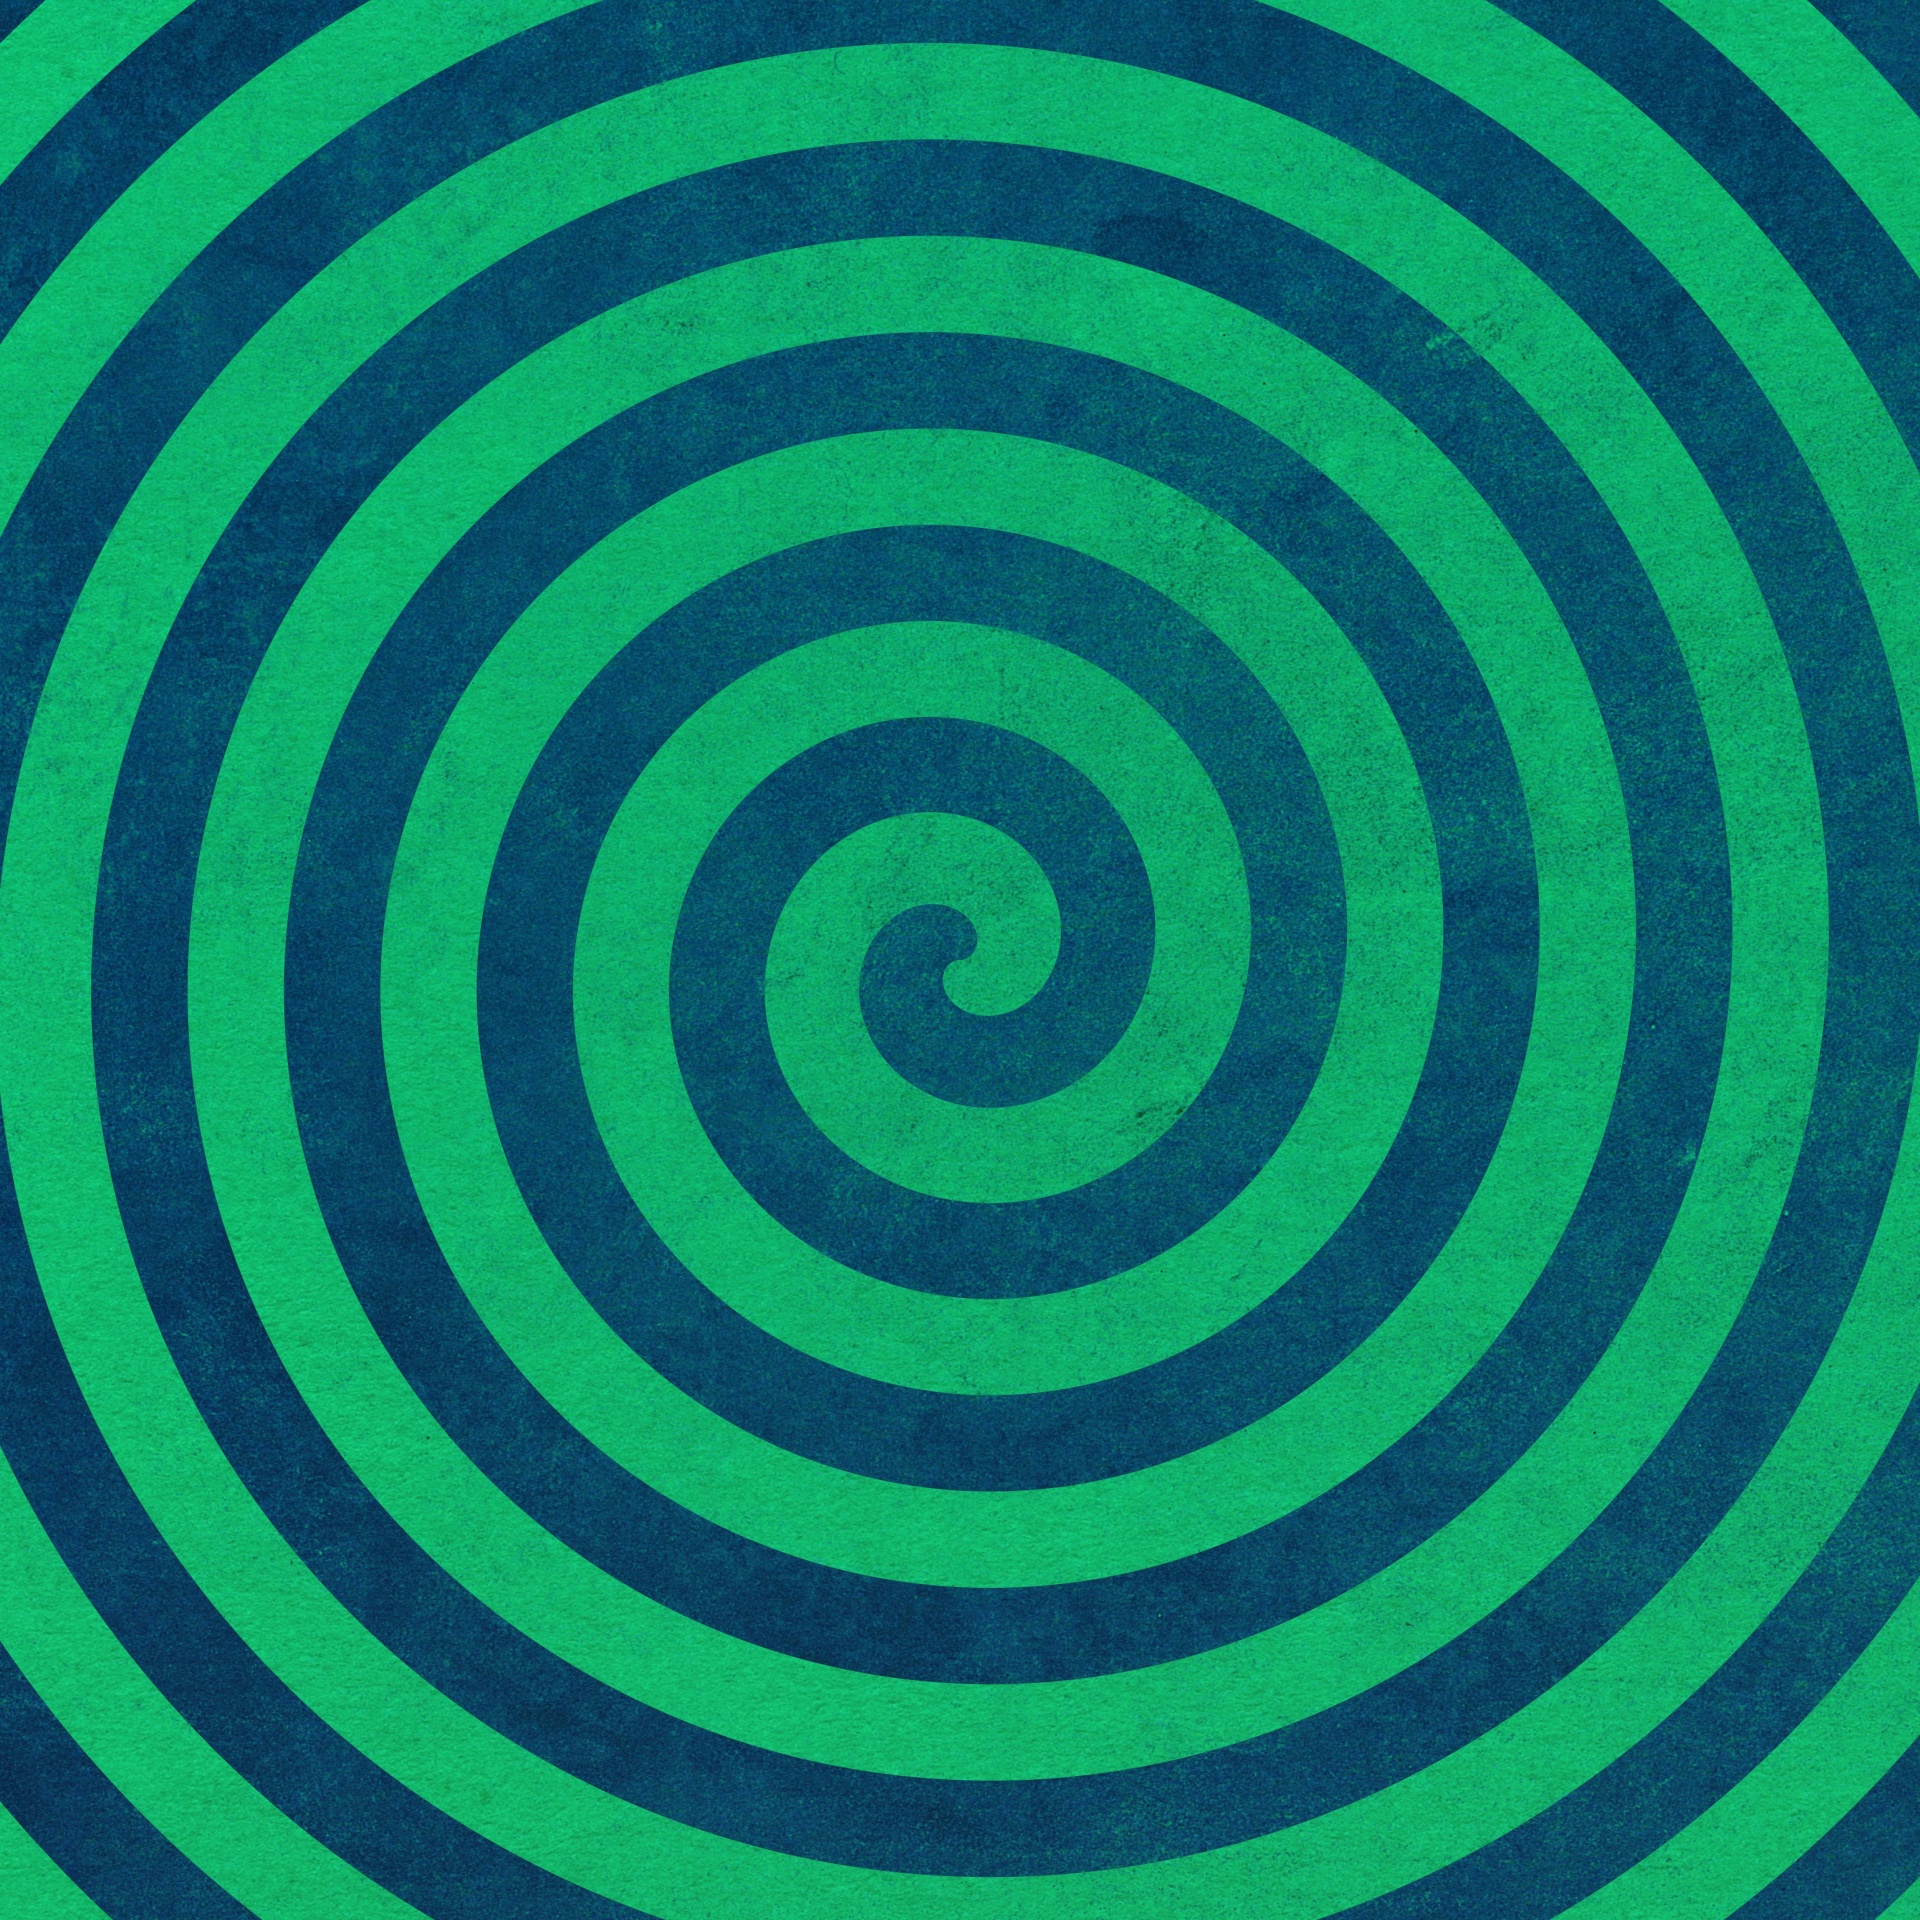 Retro Pattern Maze Swirl